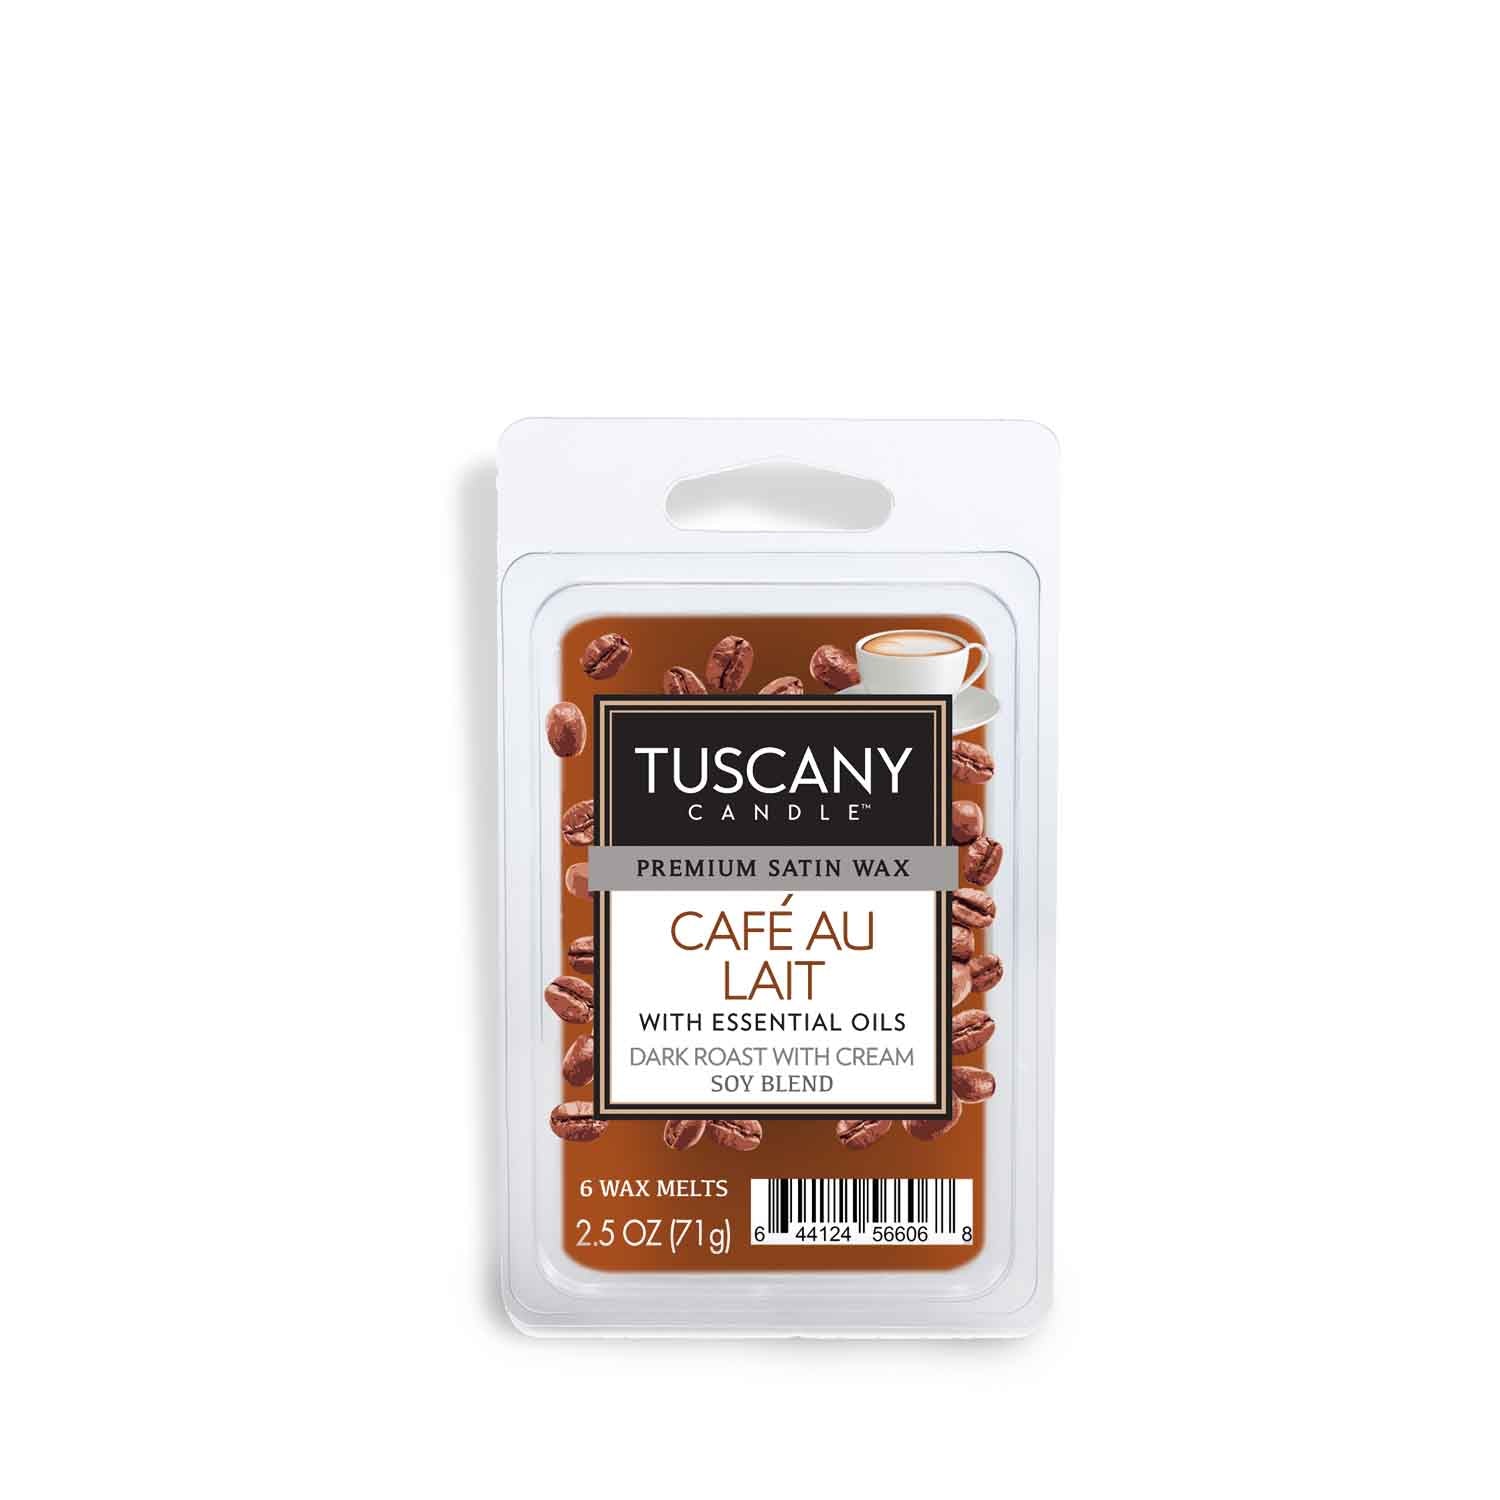 Café Au Lait scented wax melt by Tuscany Candle®.